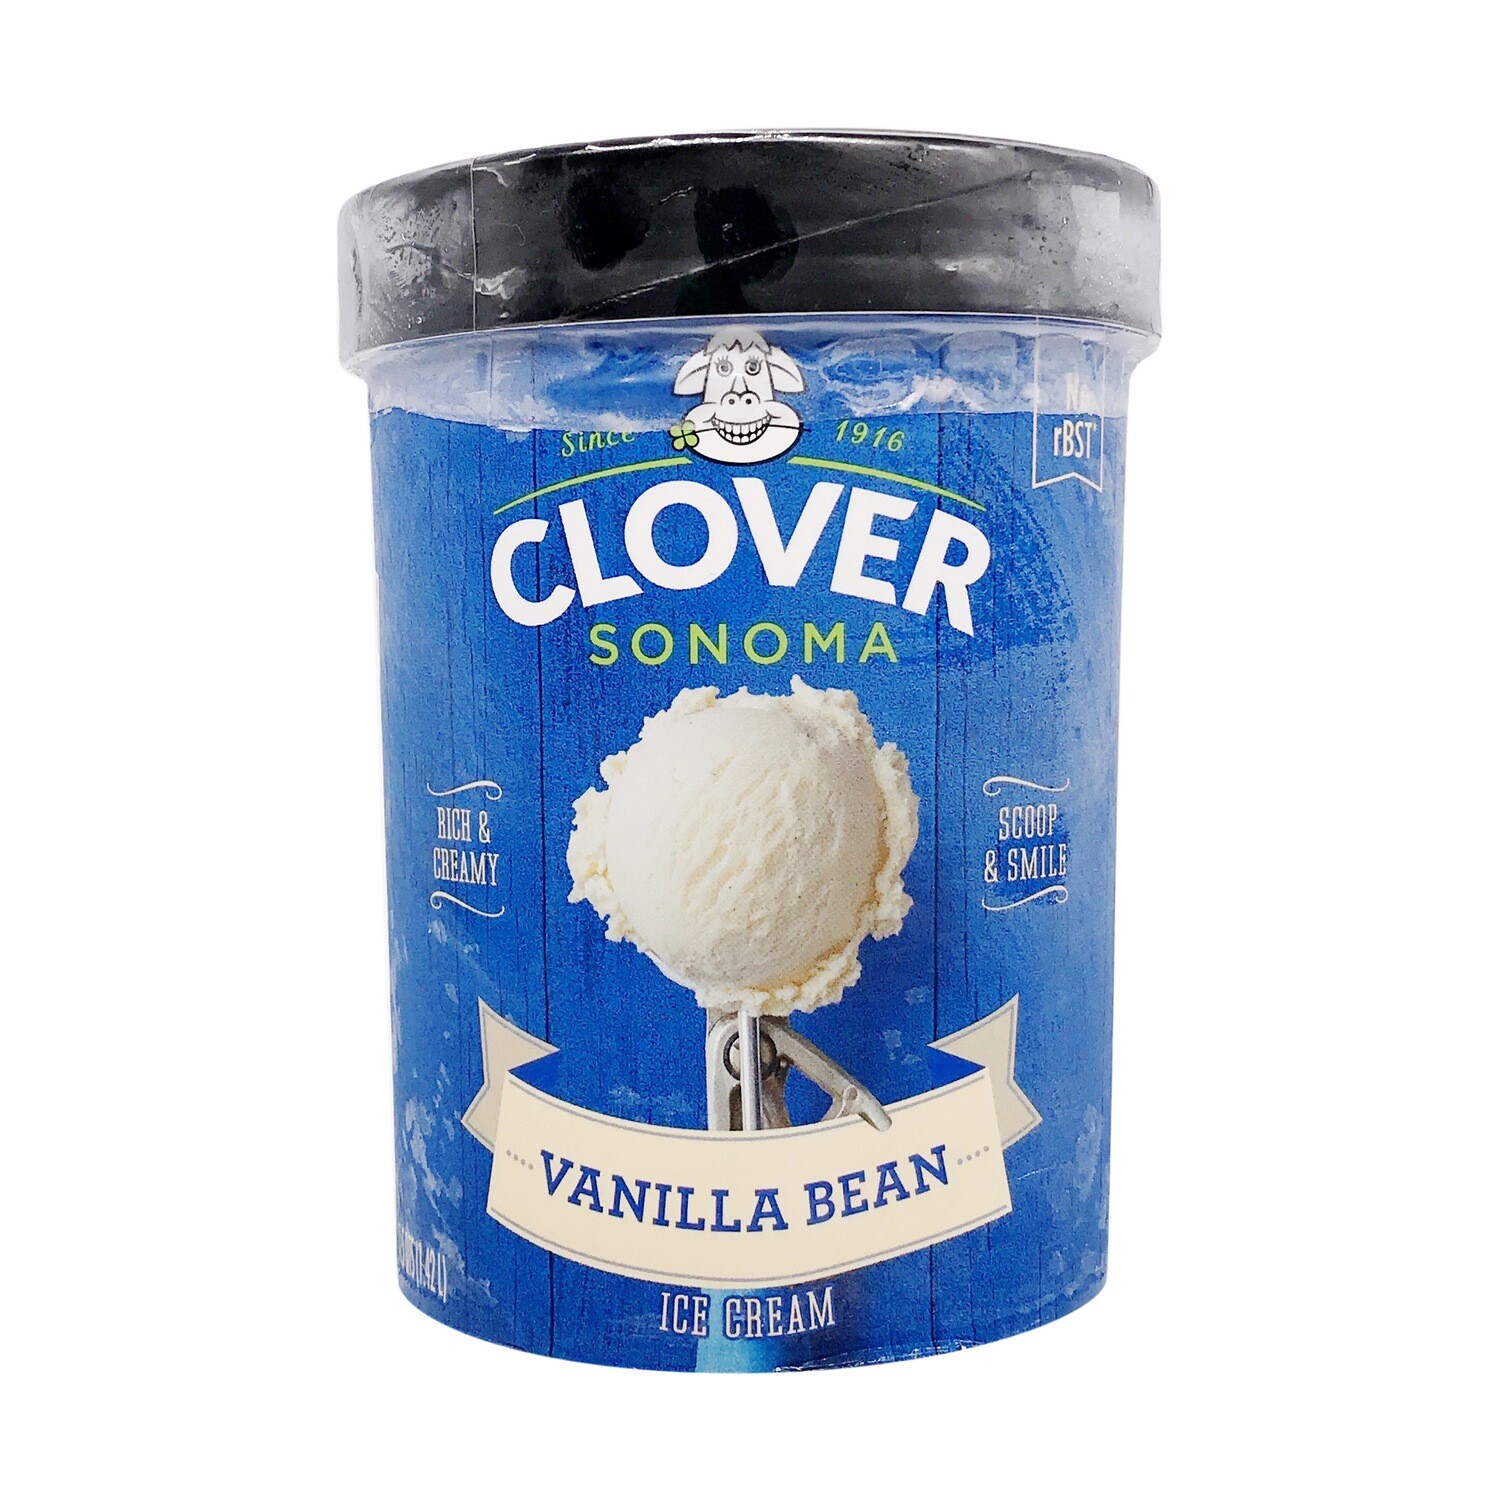 Frozen / Ice Cream / Clover Sonoma Vanilla Bean Ice Cream, 48 oz.